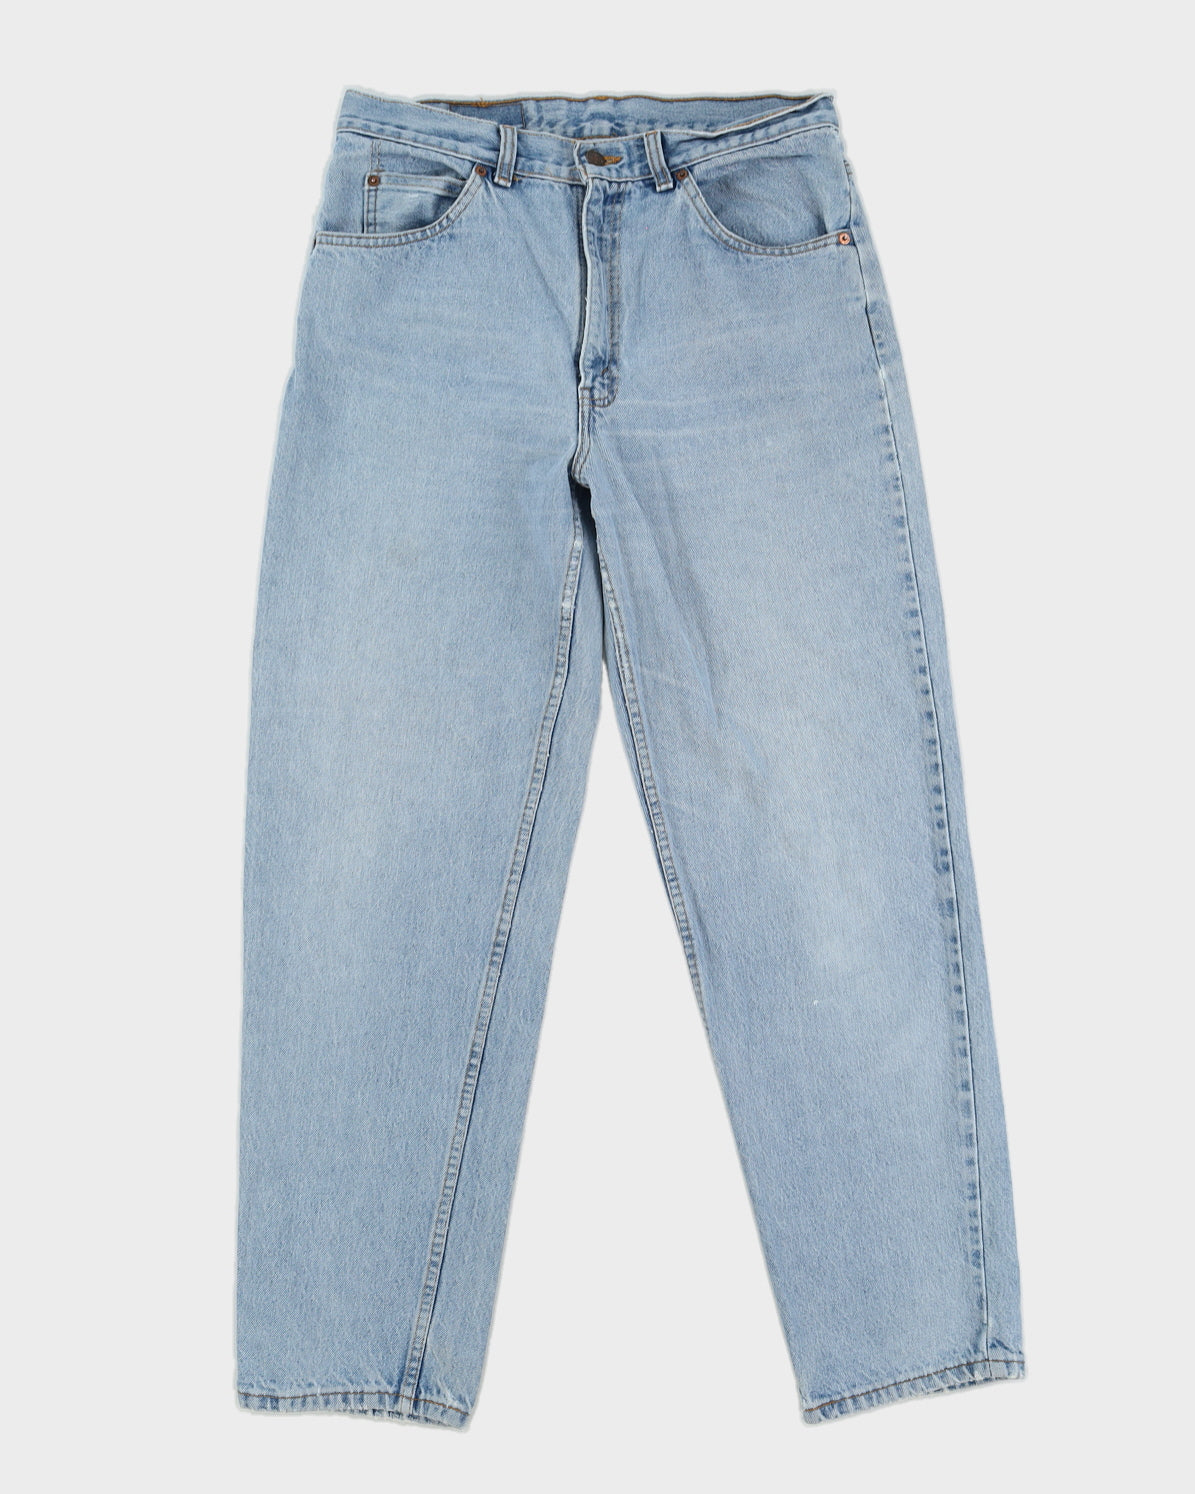 Vintage 80s Levi's Light Washed Orange Tab Blue Jeans - W33 L32